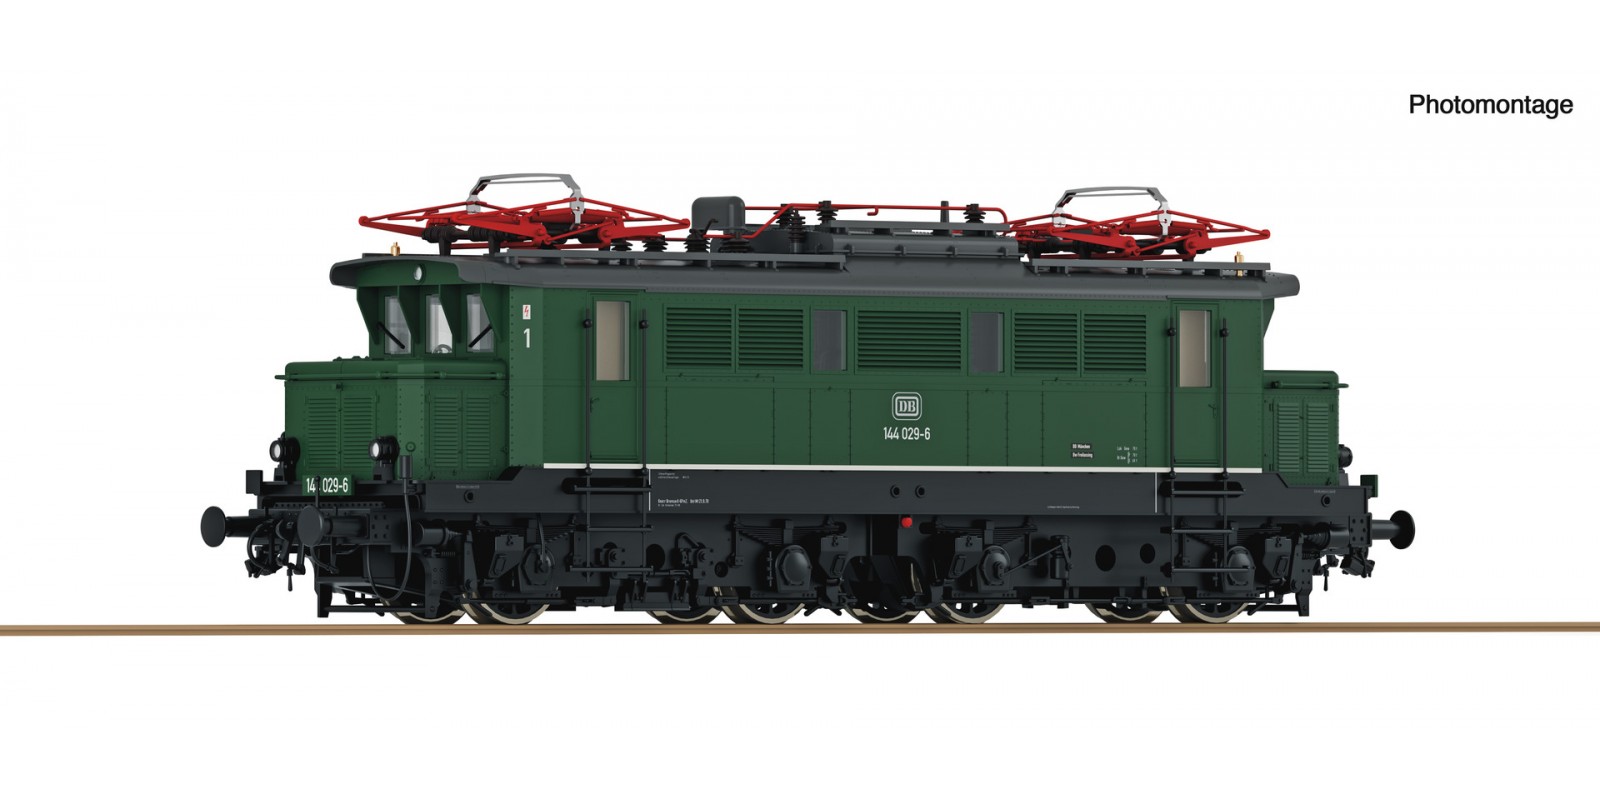 RO7510078 Electric locomotive class  144, DB                 